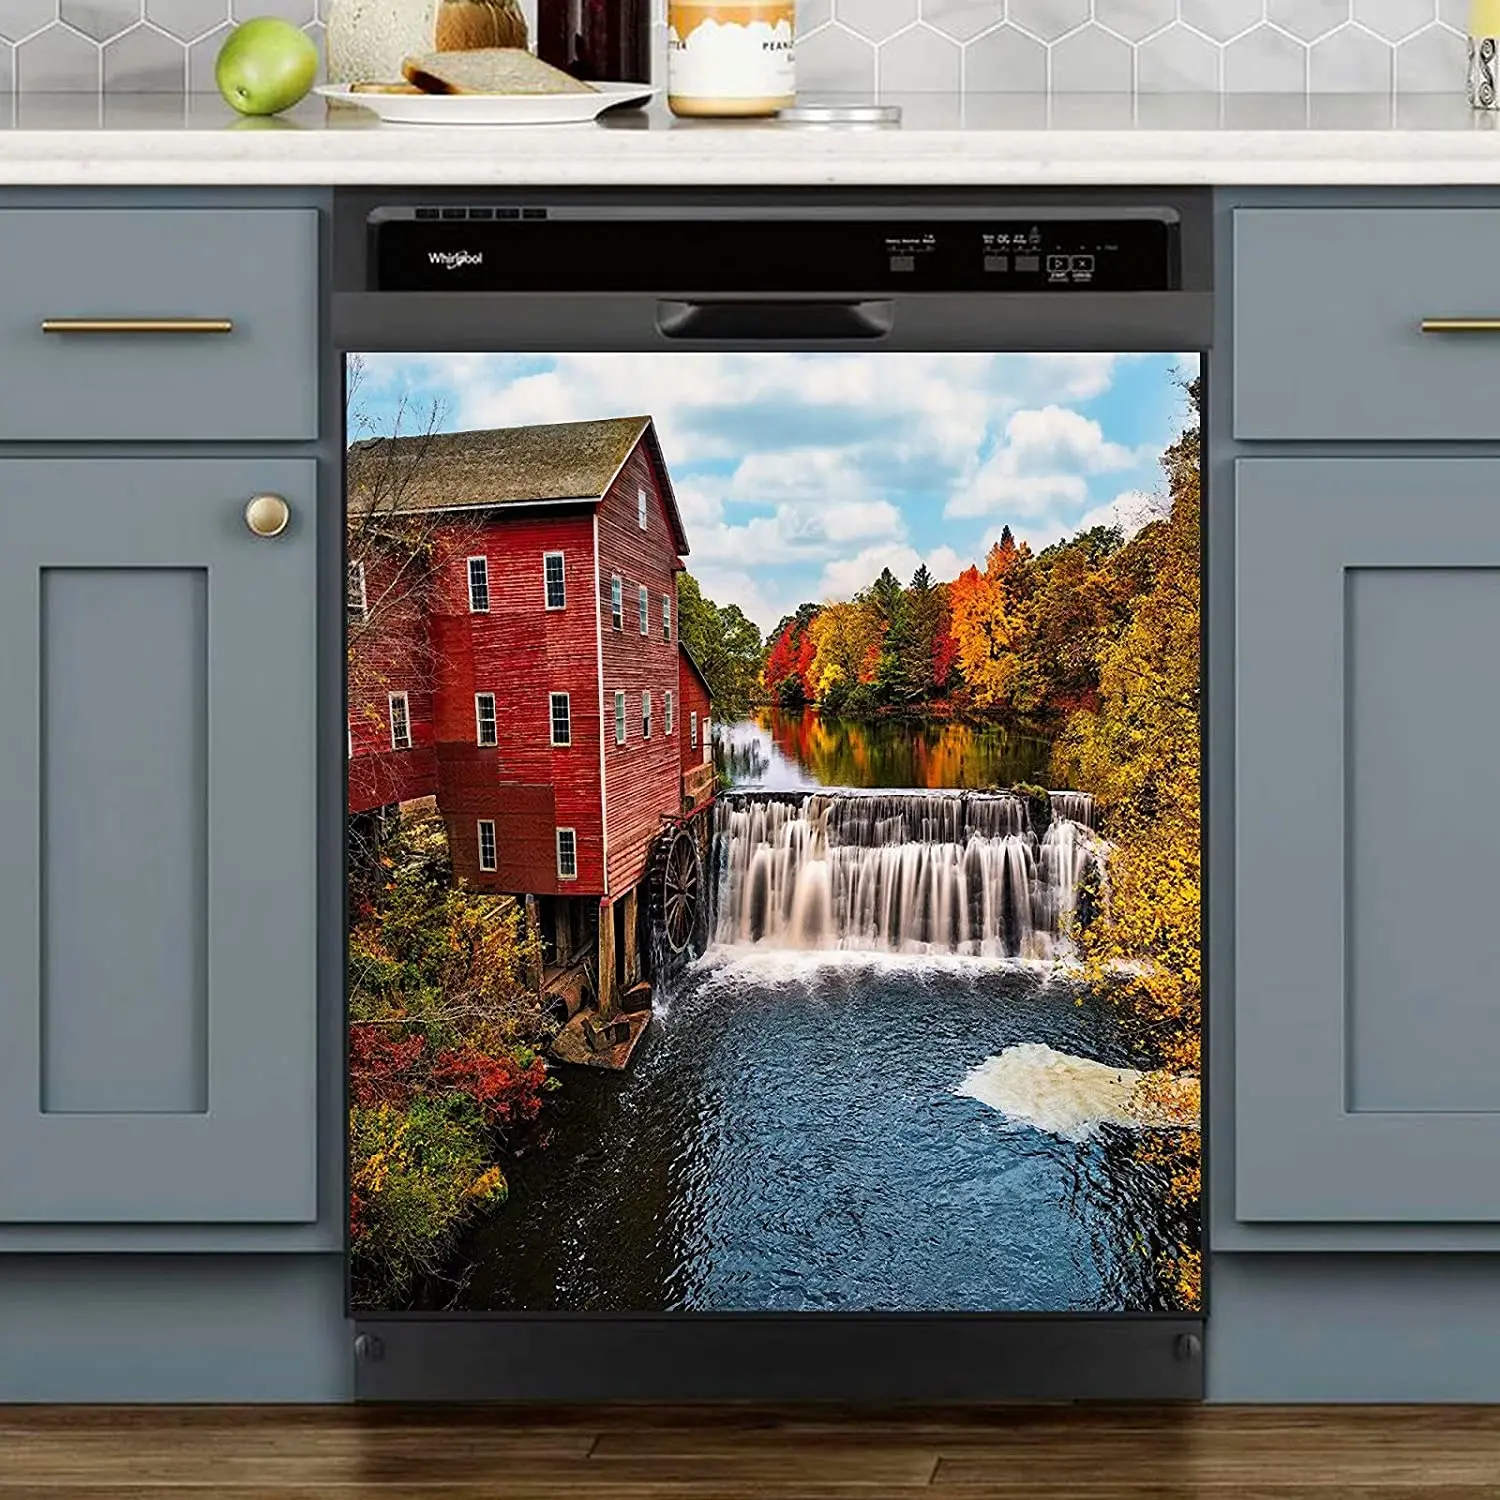 

Autumn Scenic Dishwasher Magnet Cover, Home Kitchen Decoration,Rustic Idyllic Style,River Sticker Decorative Refrigerator,Fall T